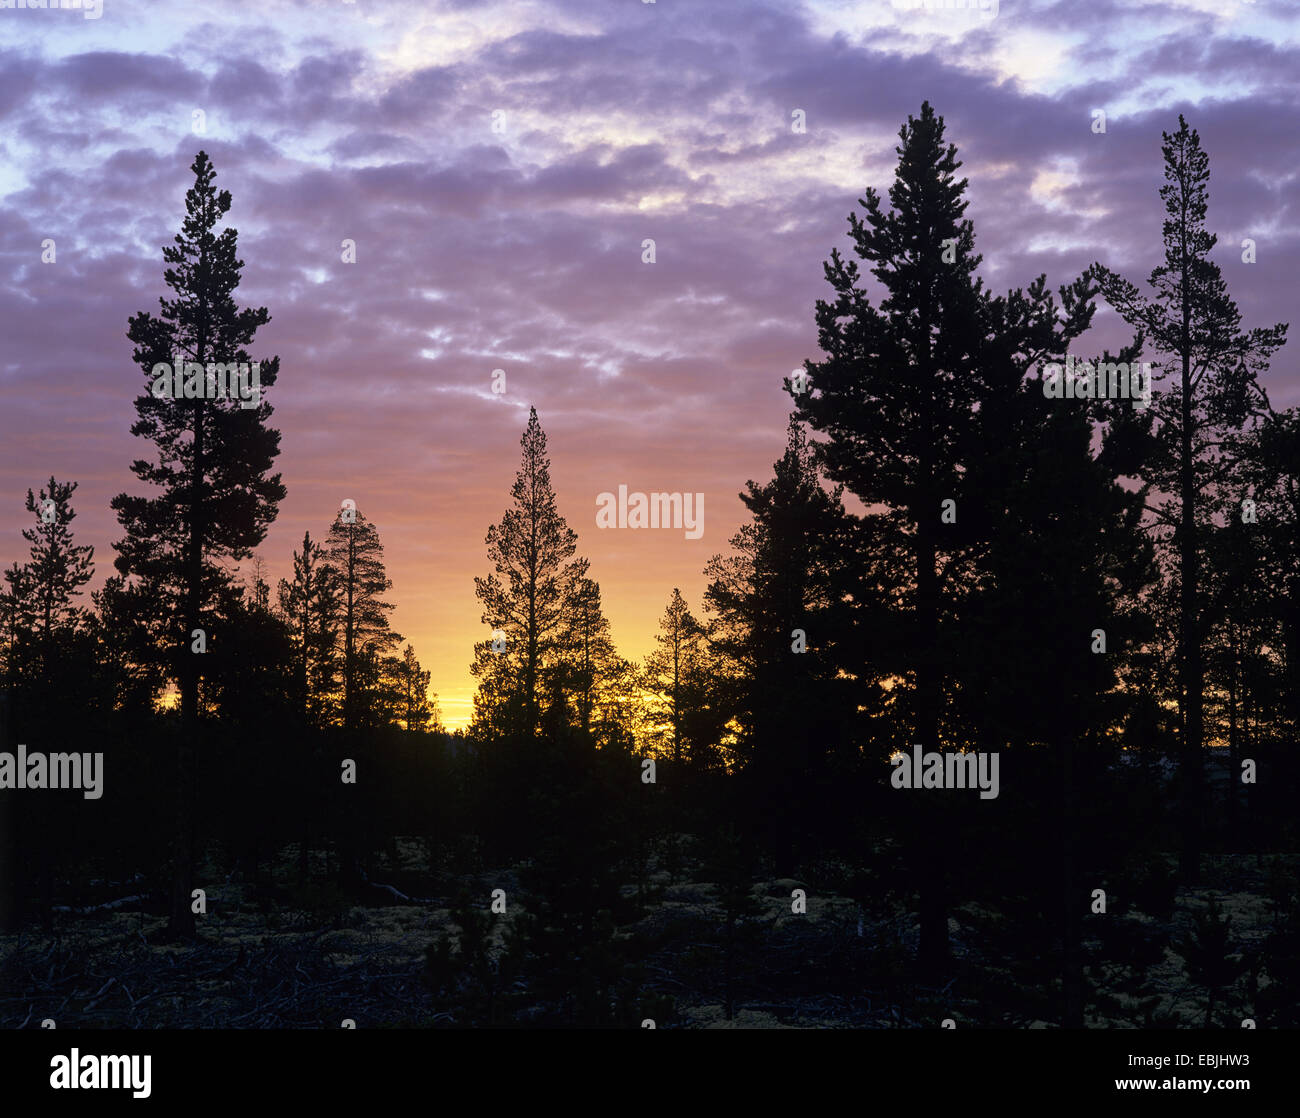 Scotch pine, scots pine (Pinus sylvestris), silhouettes of pines at sunset, Norway, Rondane Nationalpark Stock Photo